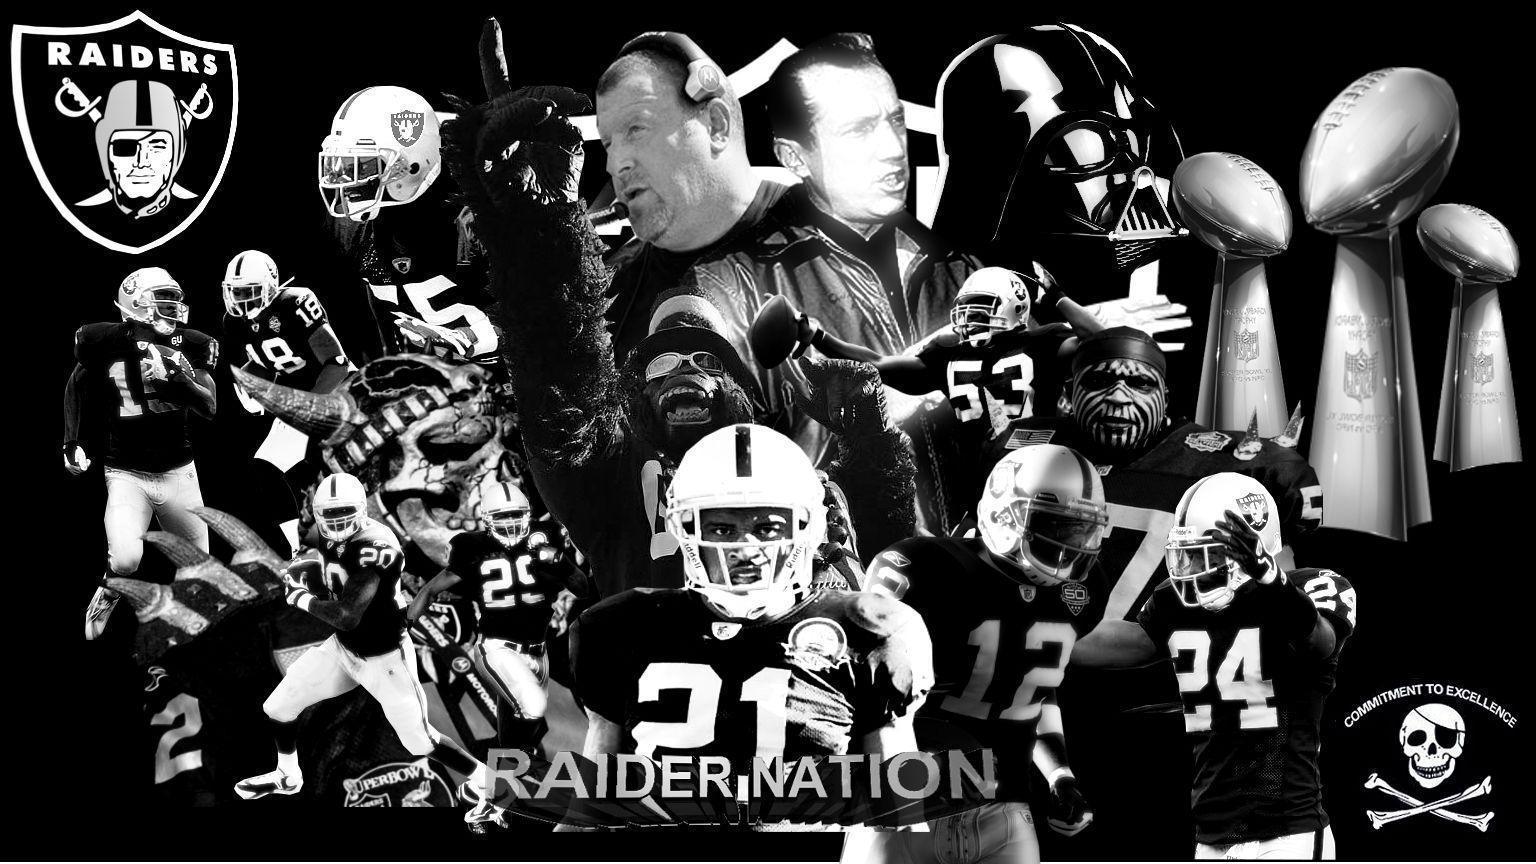 Oakland Raiders Wallpaper